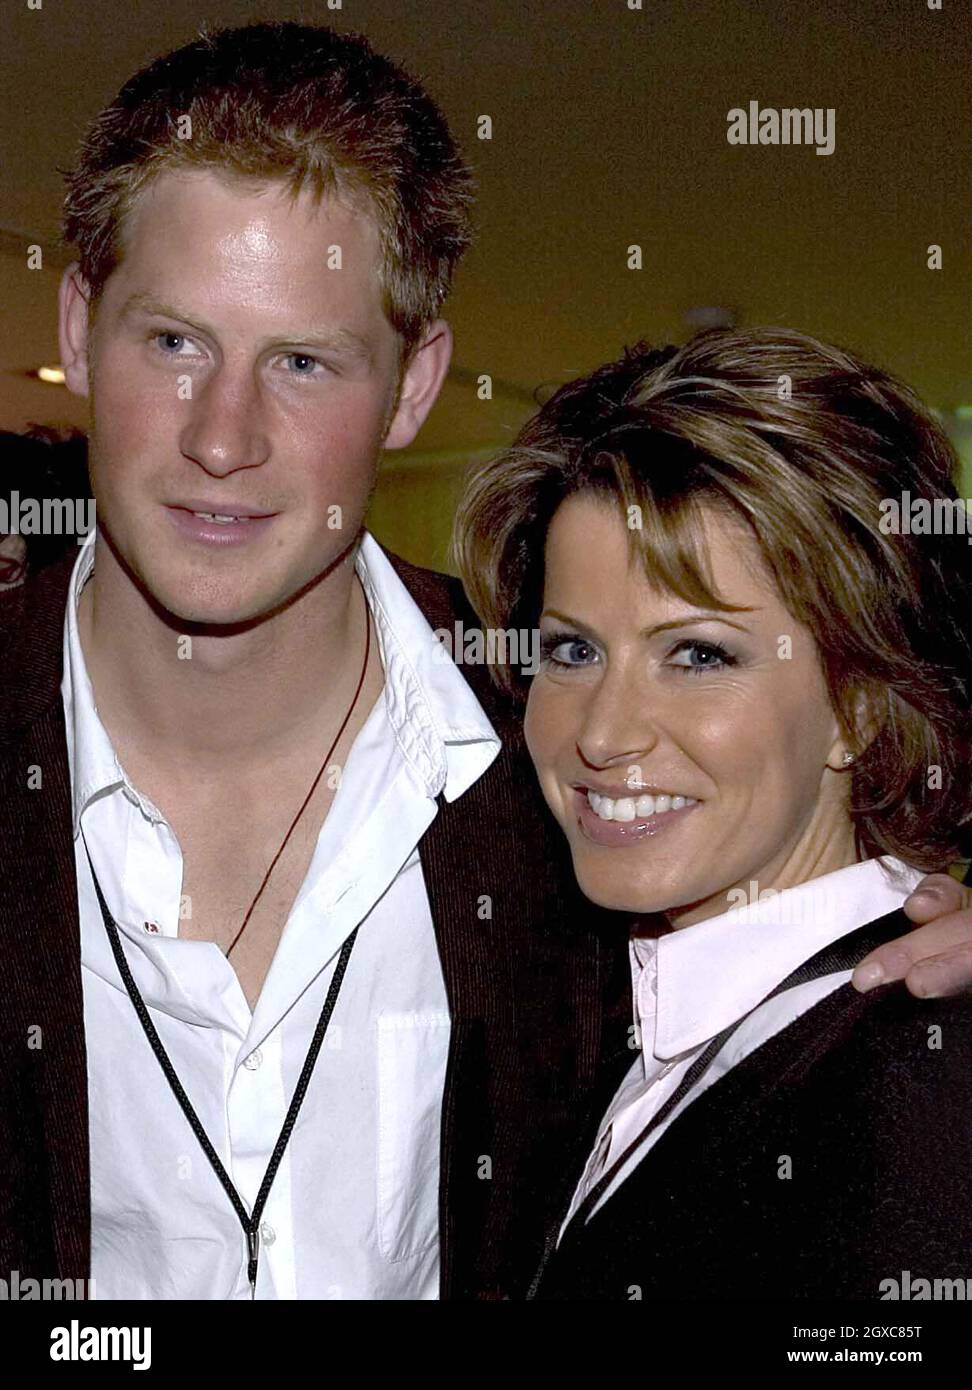 Prince William meets television presenter Natasha Kaplinsky at a reception following the Concert for Diana at Wembley Stadium. Stock Photo